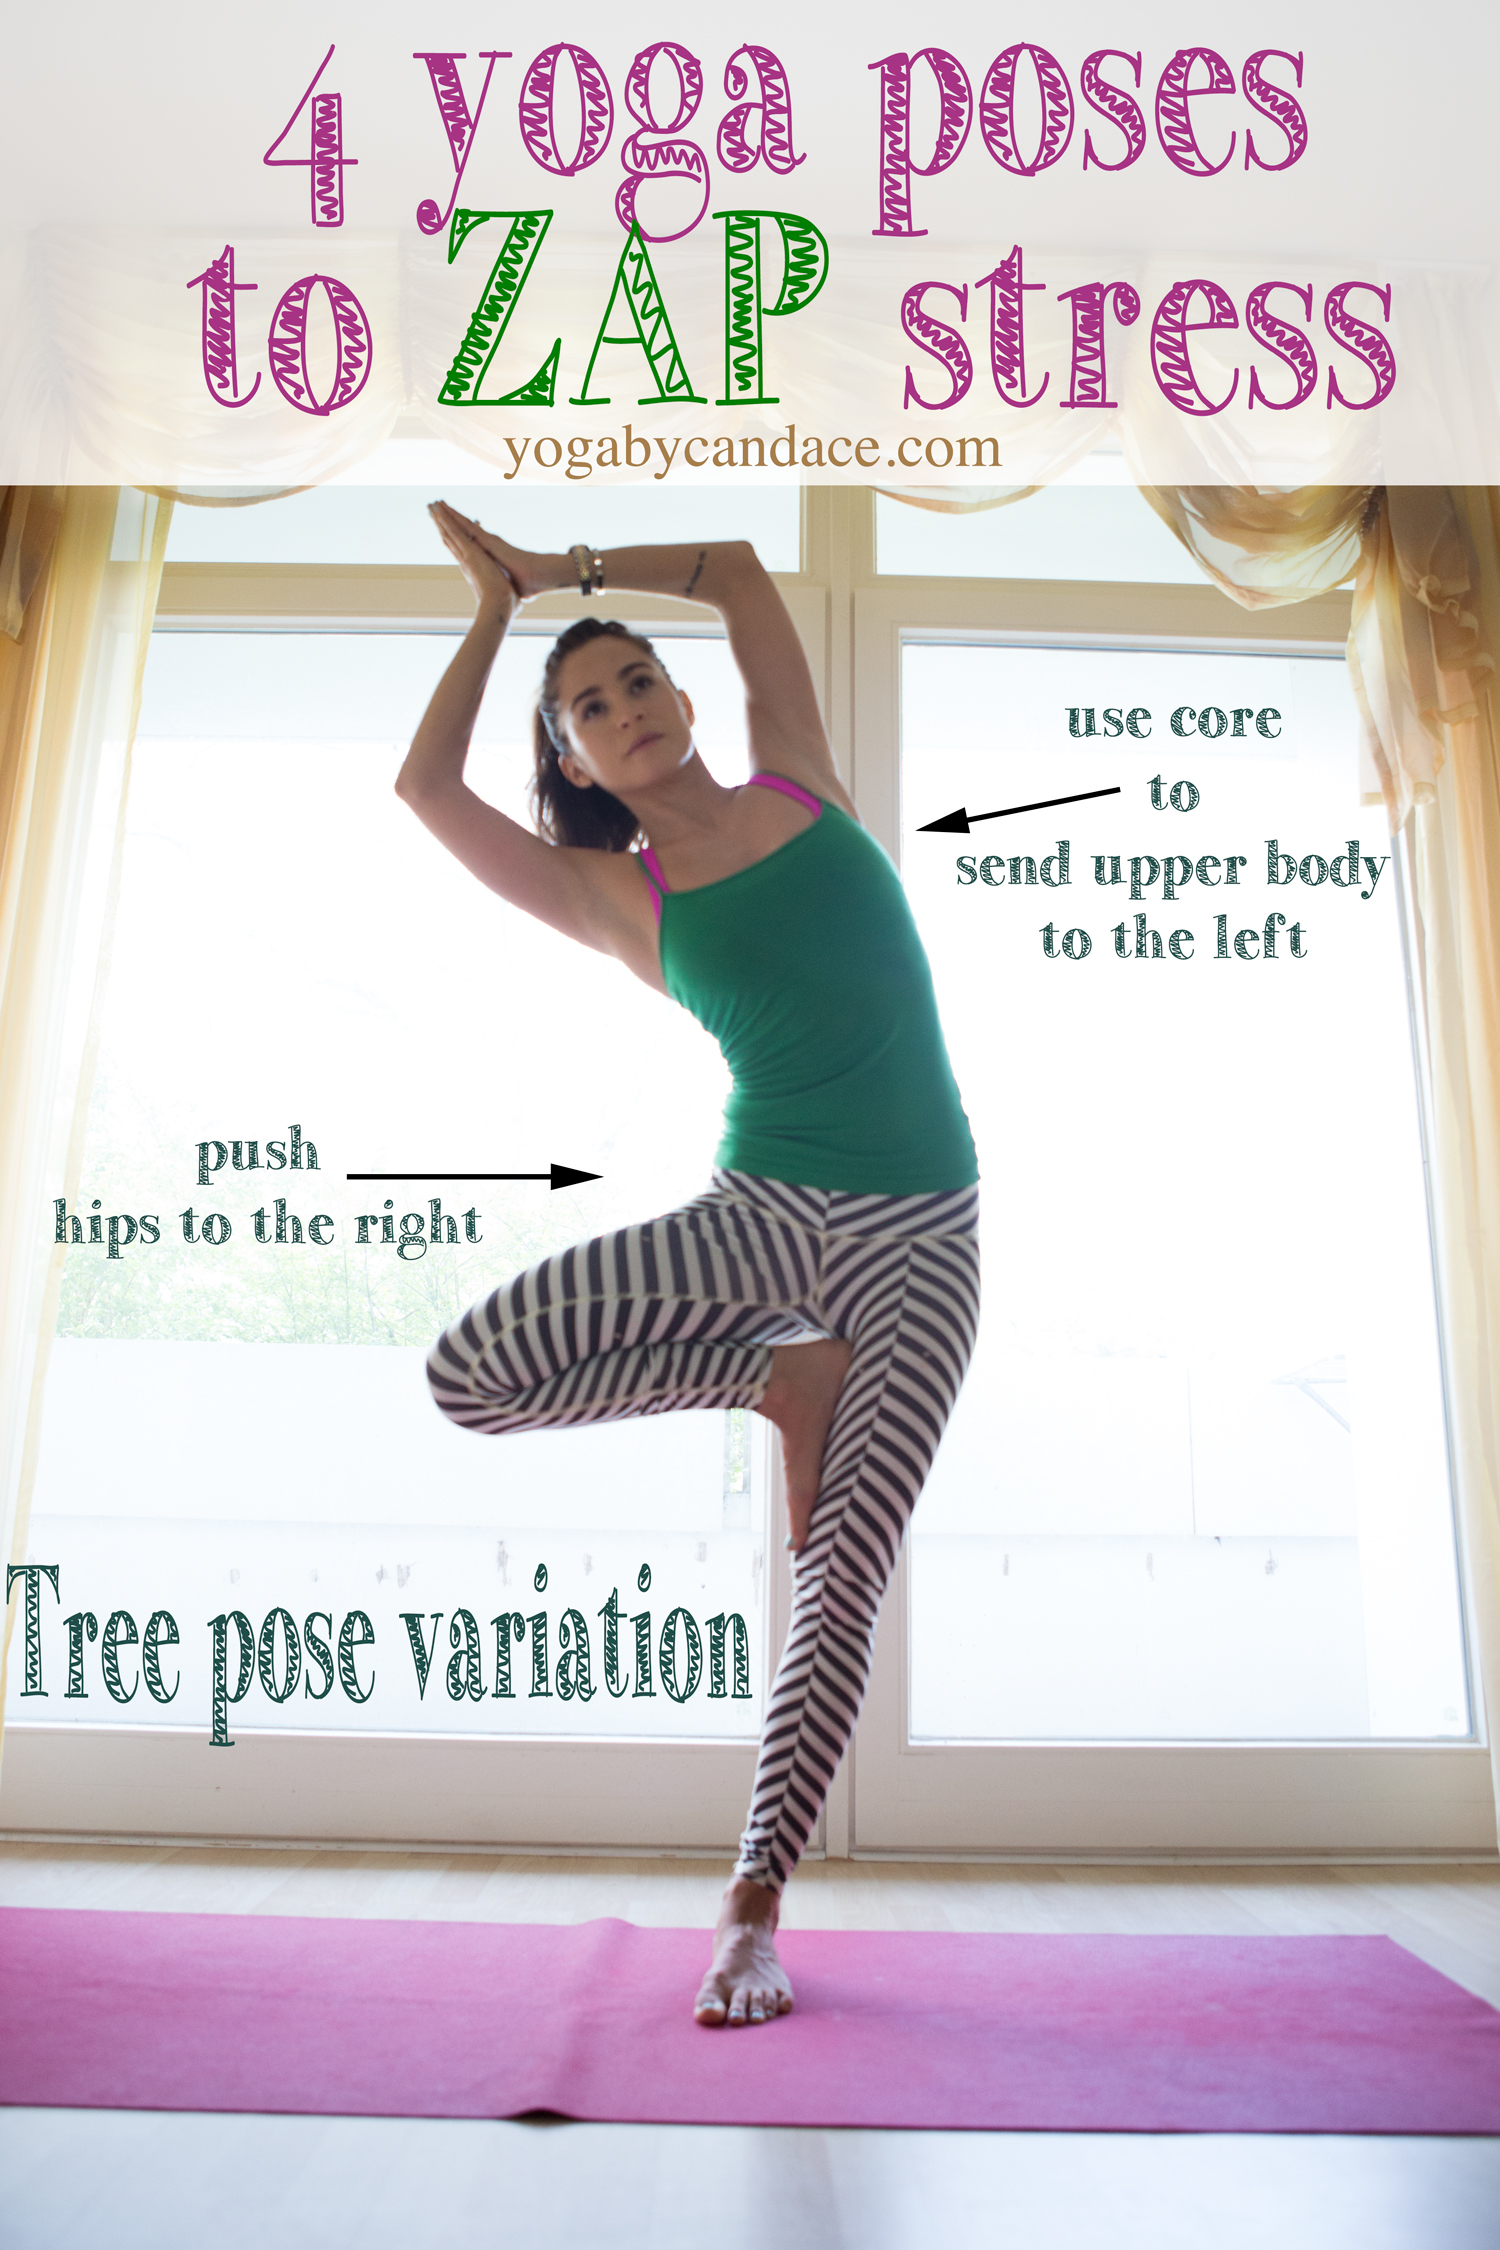 CAMEL POSE VARIATIONS – Elena Miss Yoga